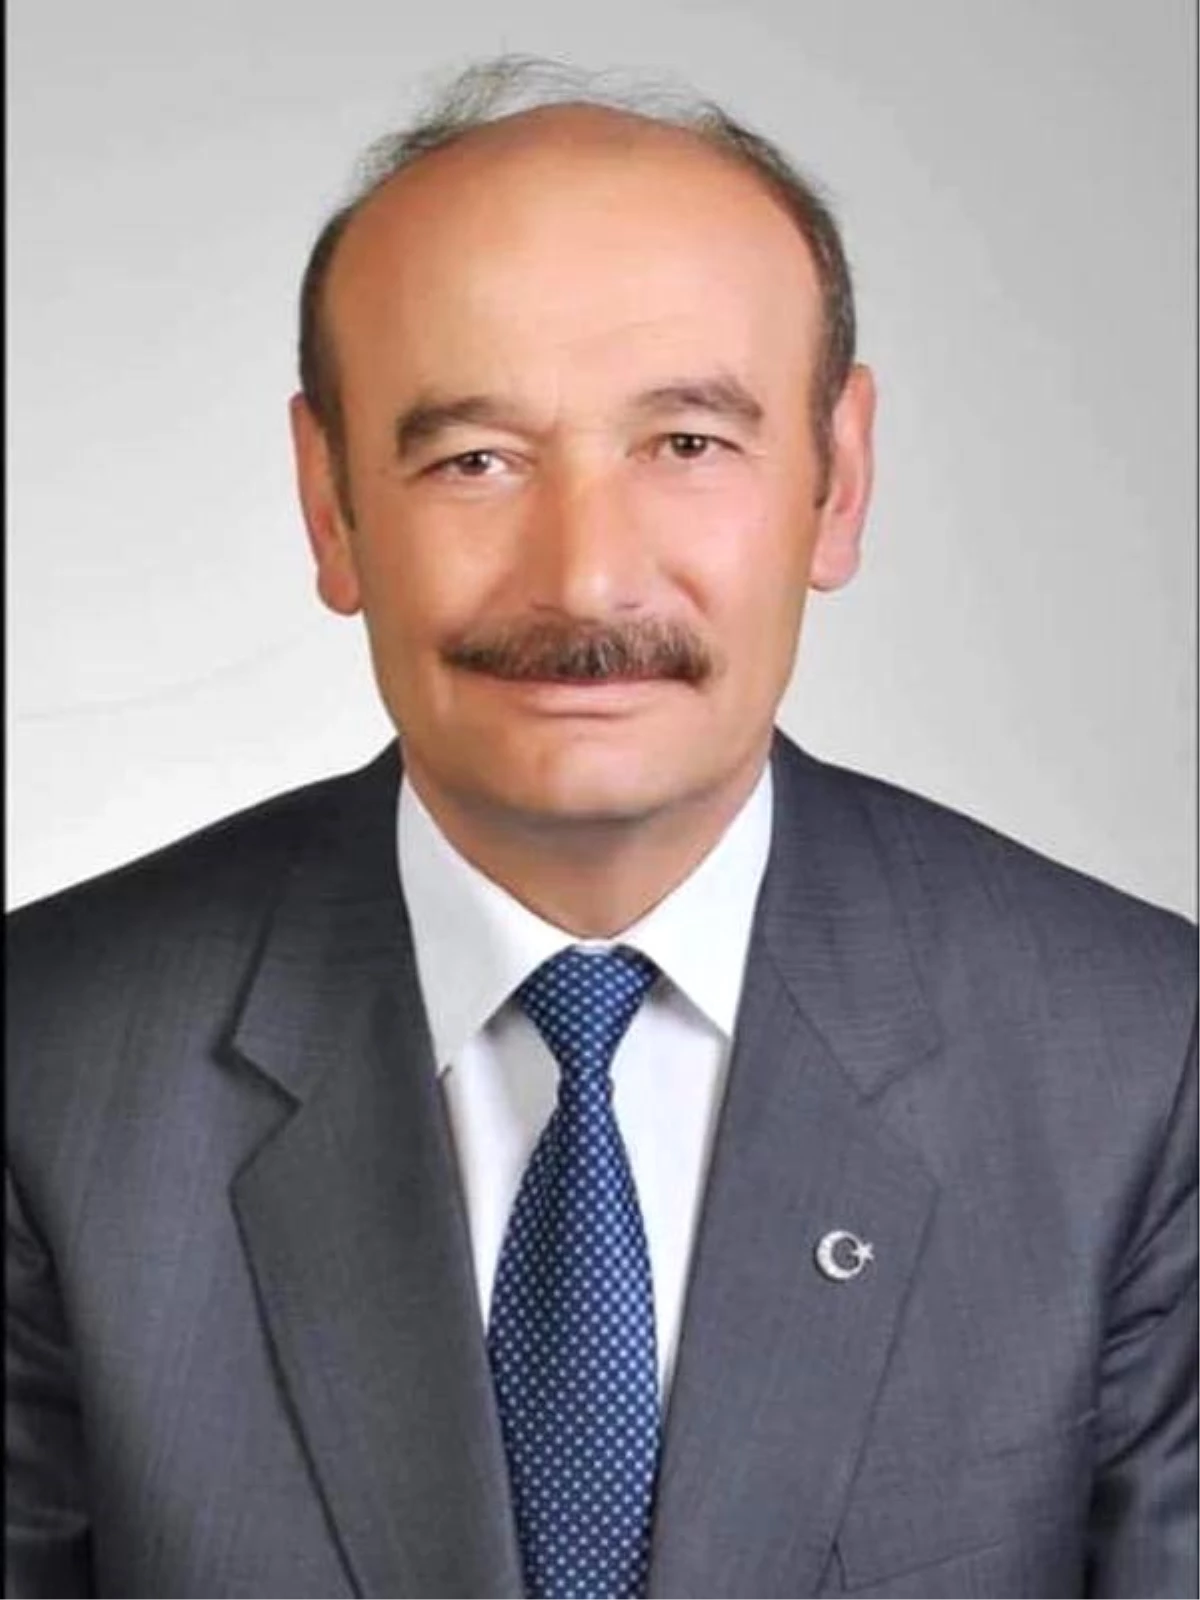 MHP Alaşehir İlçe Başkanı Apan, Son Yolculuğuna Uğurlandı